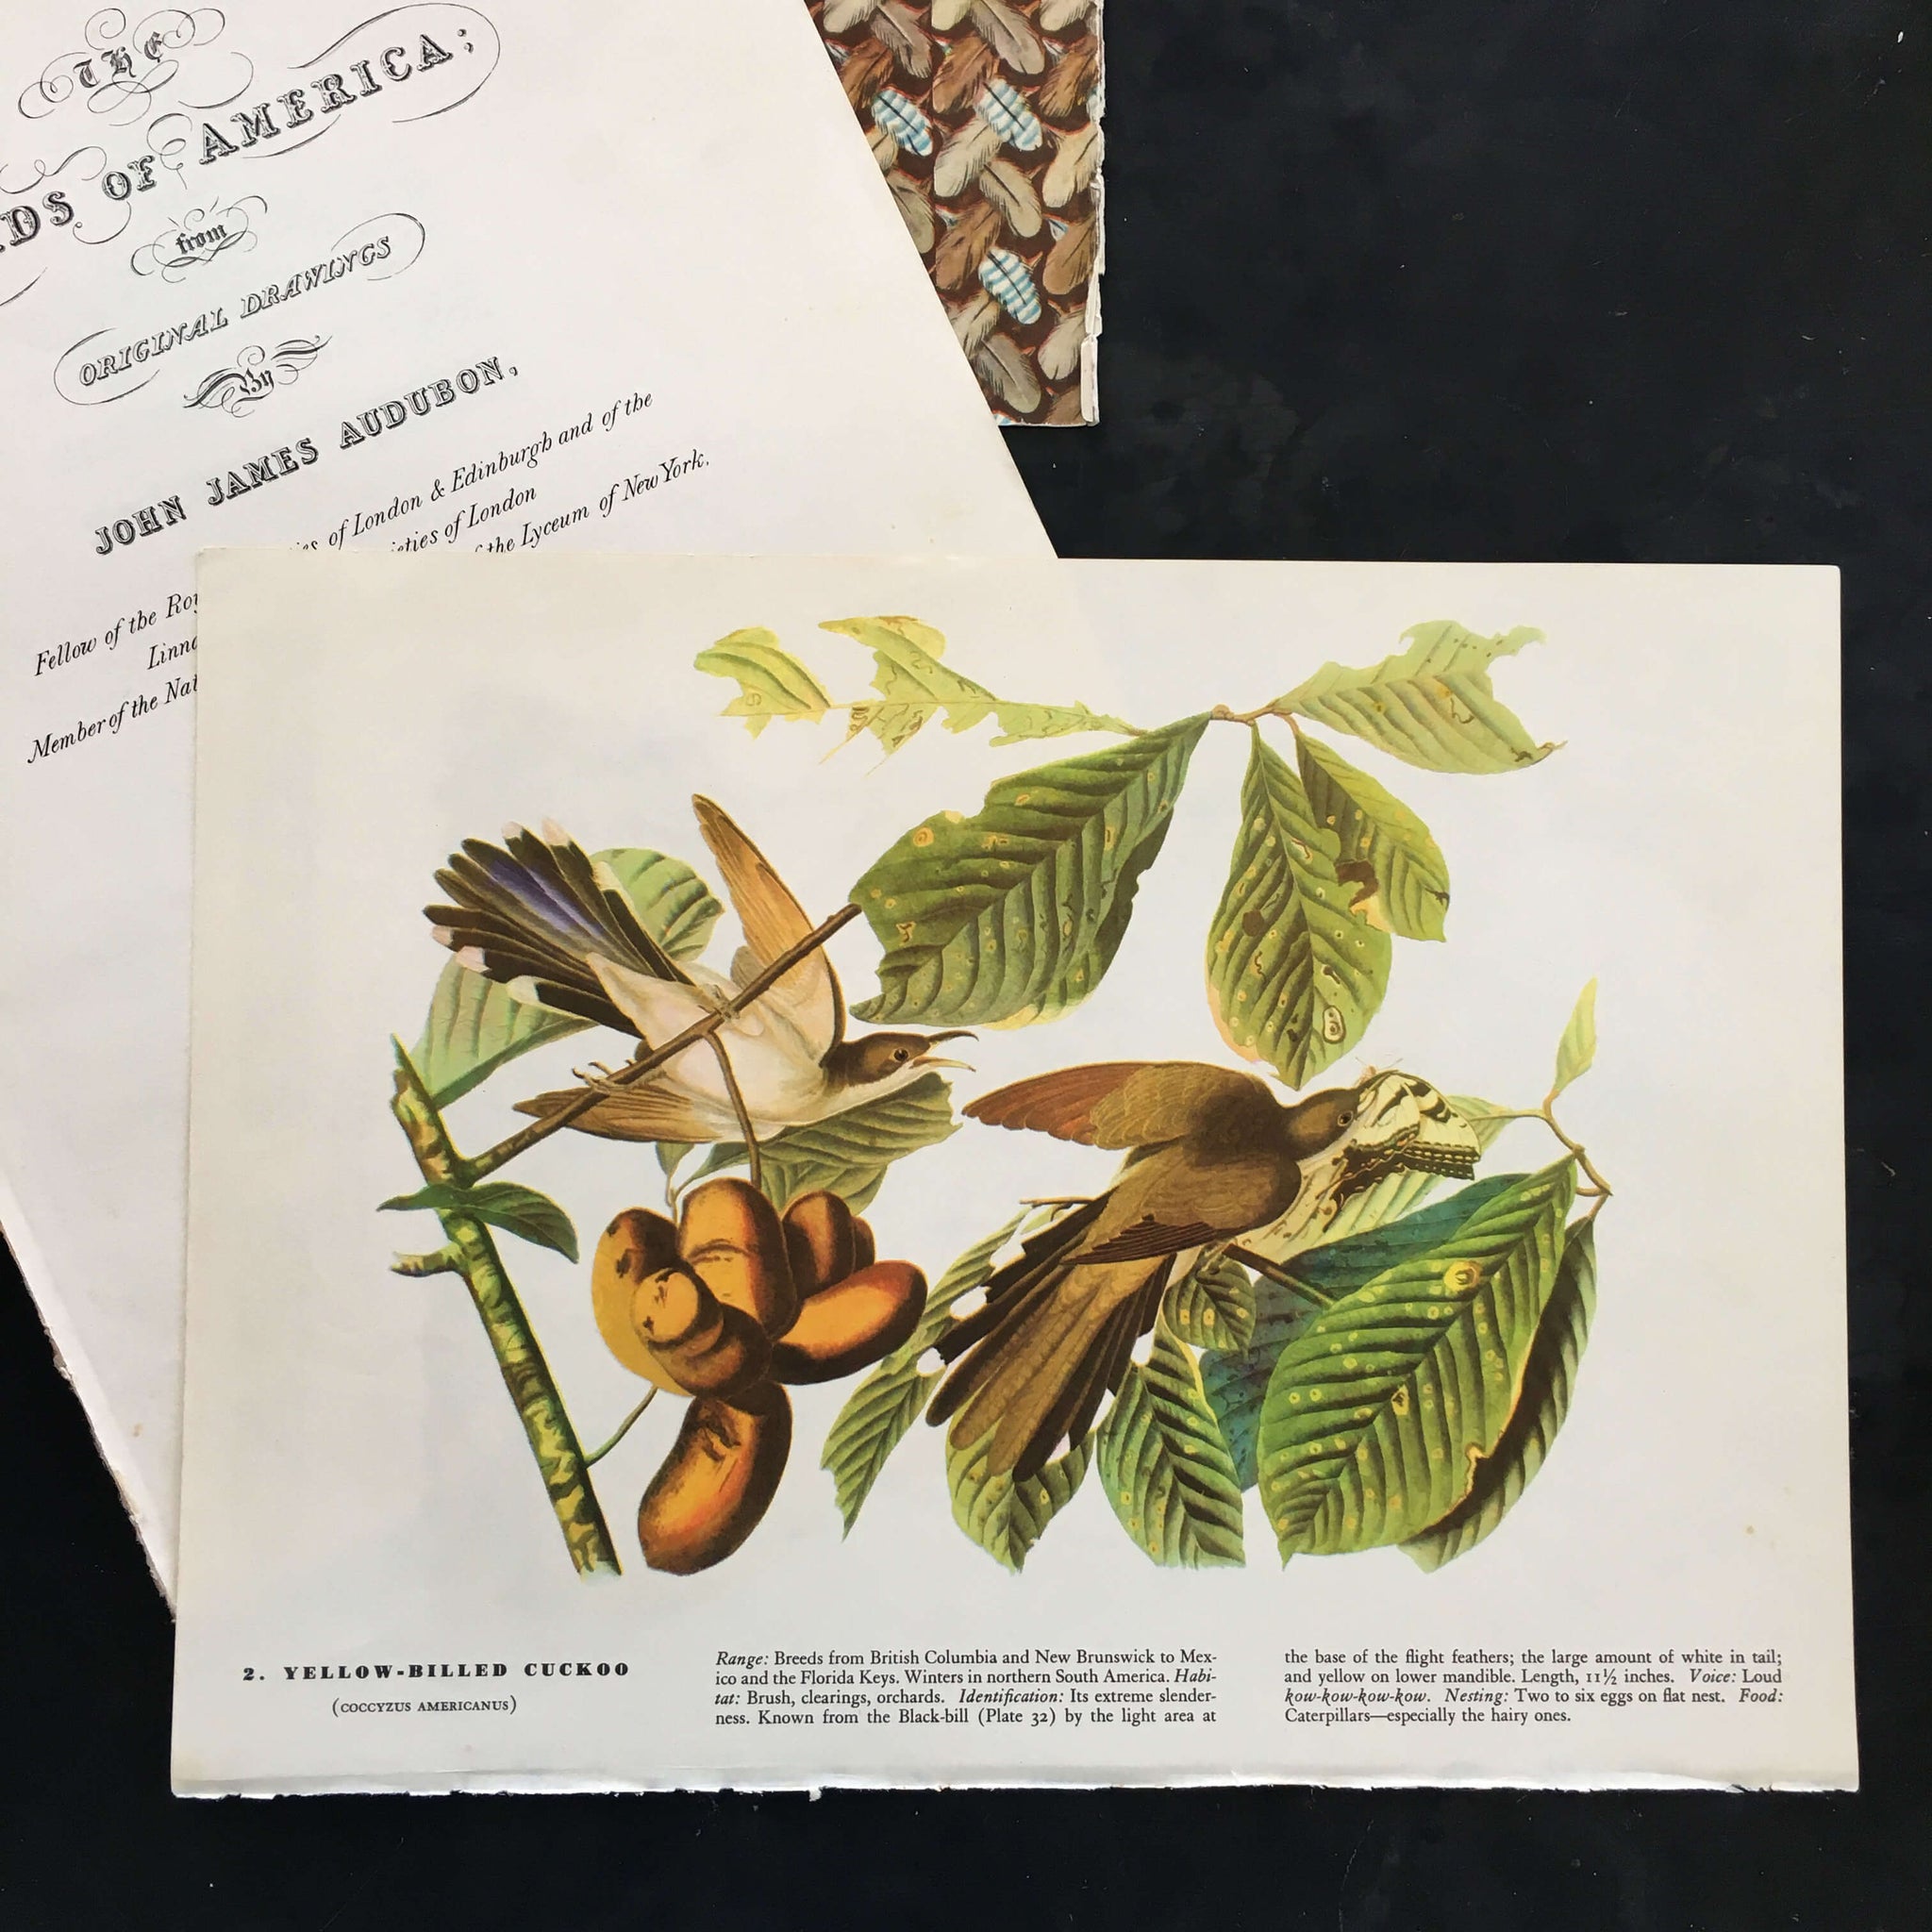 Vintage Wild Turkey Bookplates - John James Audubon's Birds of America Prints circa 1967